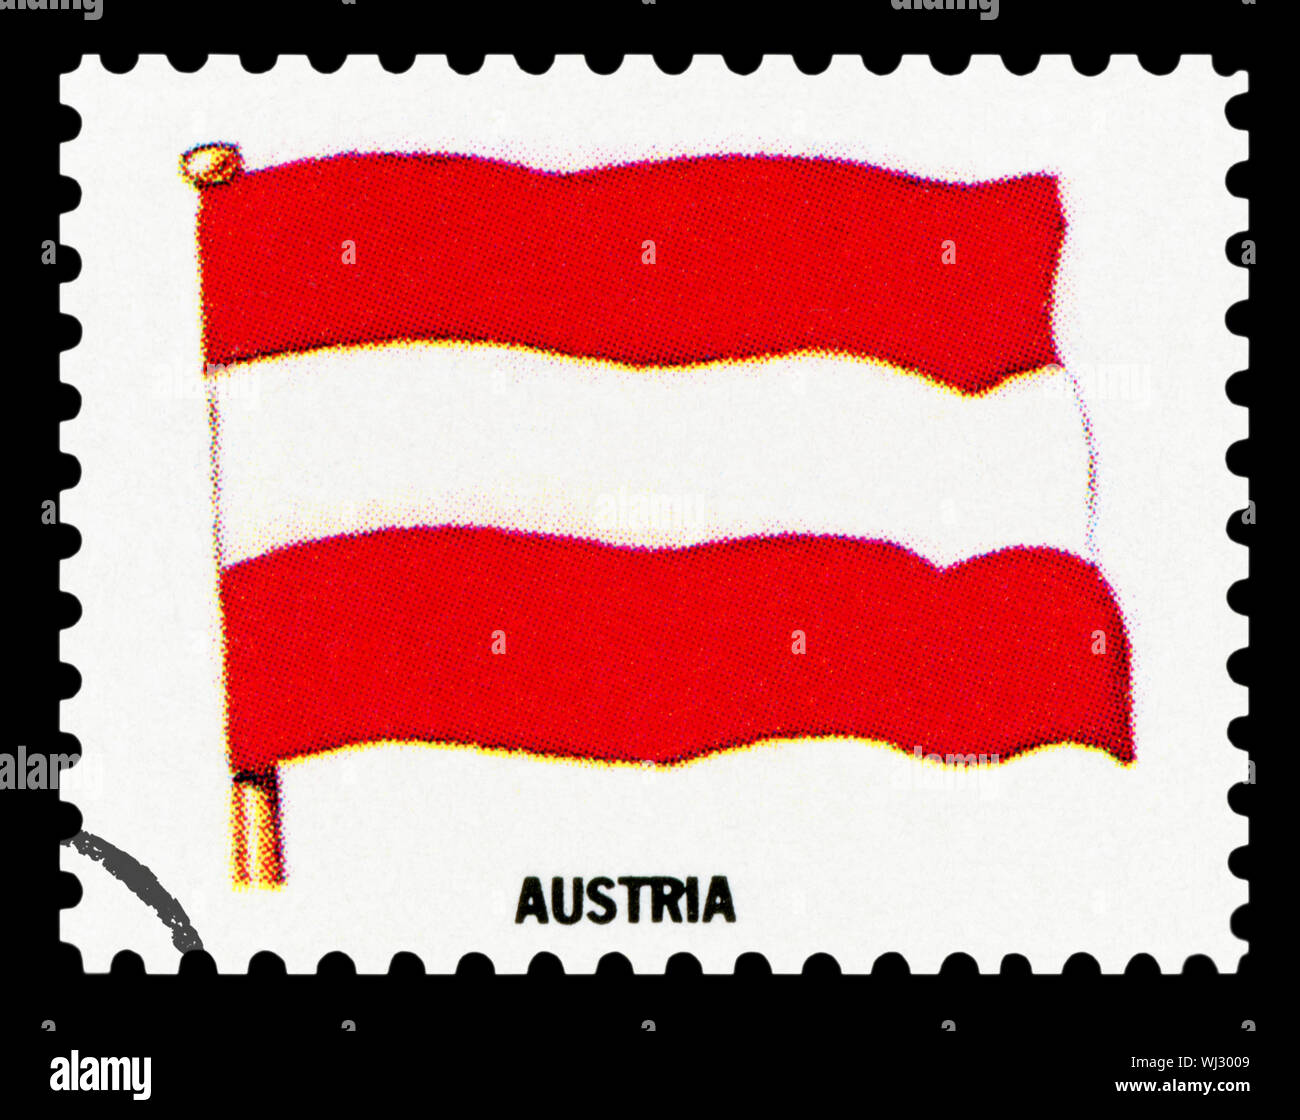 AUSTRIA FLAG - Postage Stamp isolated on black background. Stock Photo